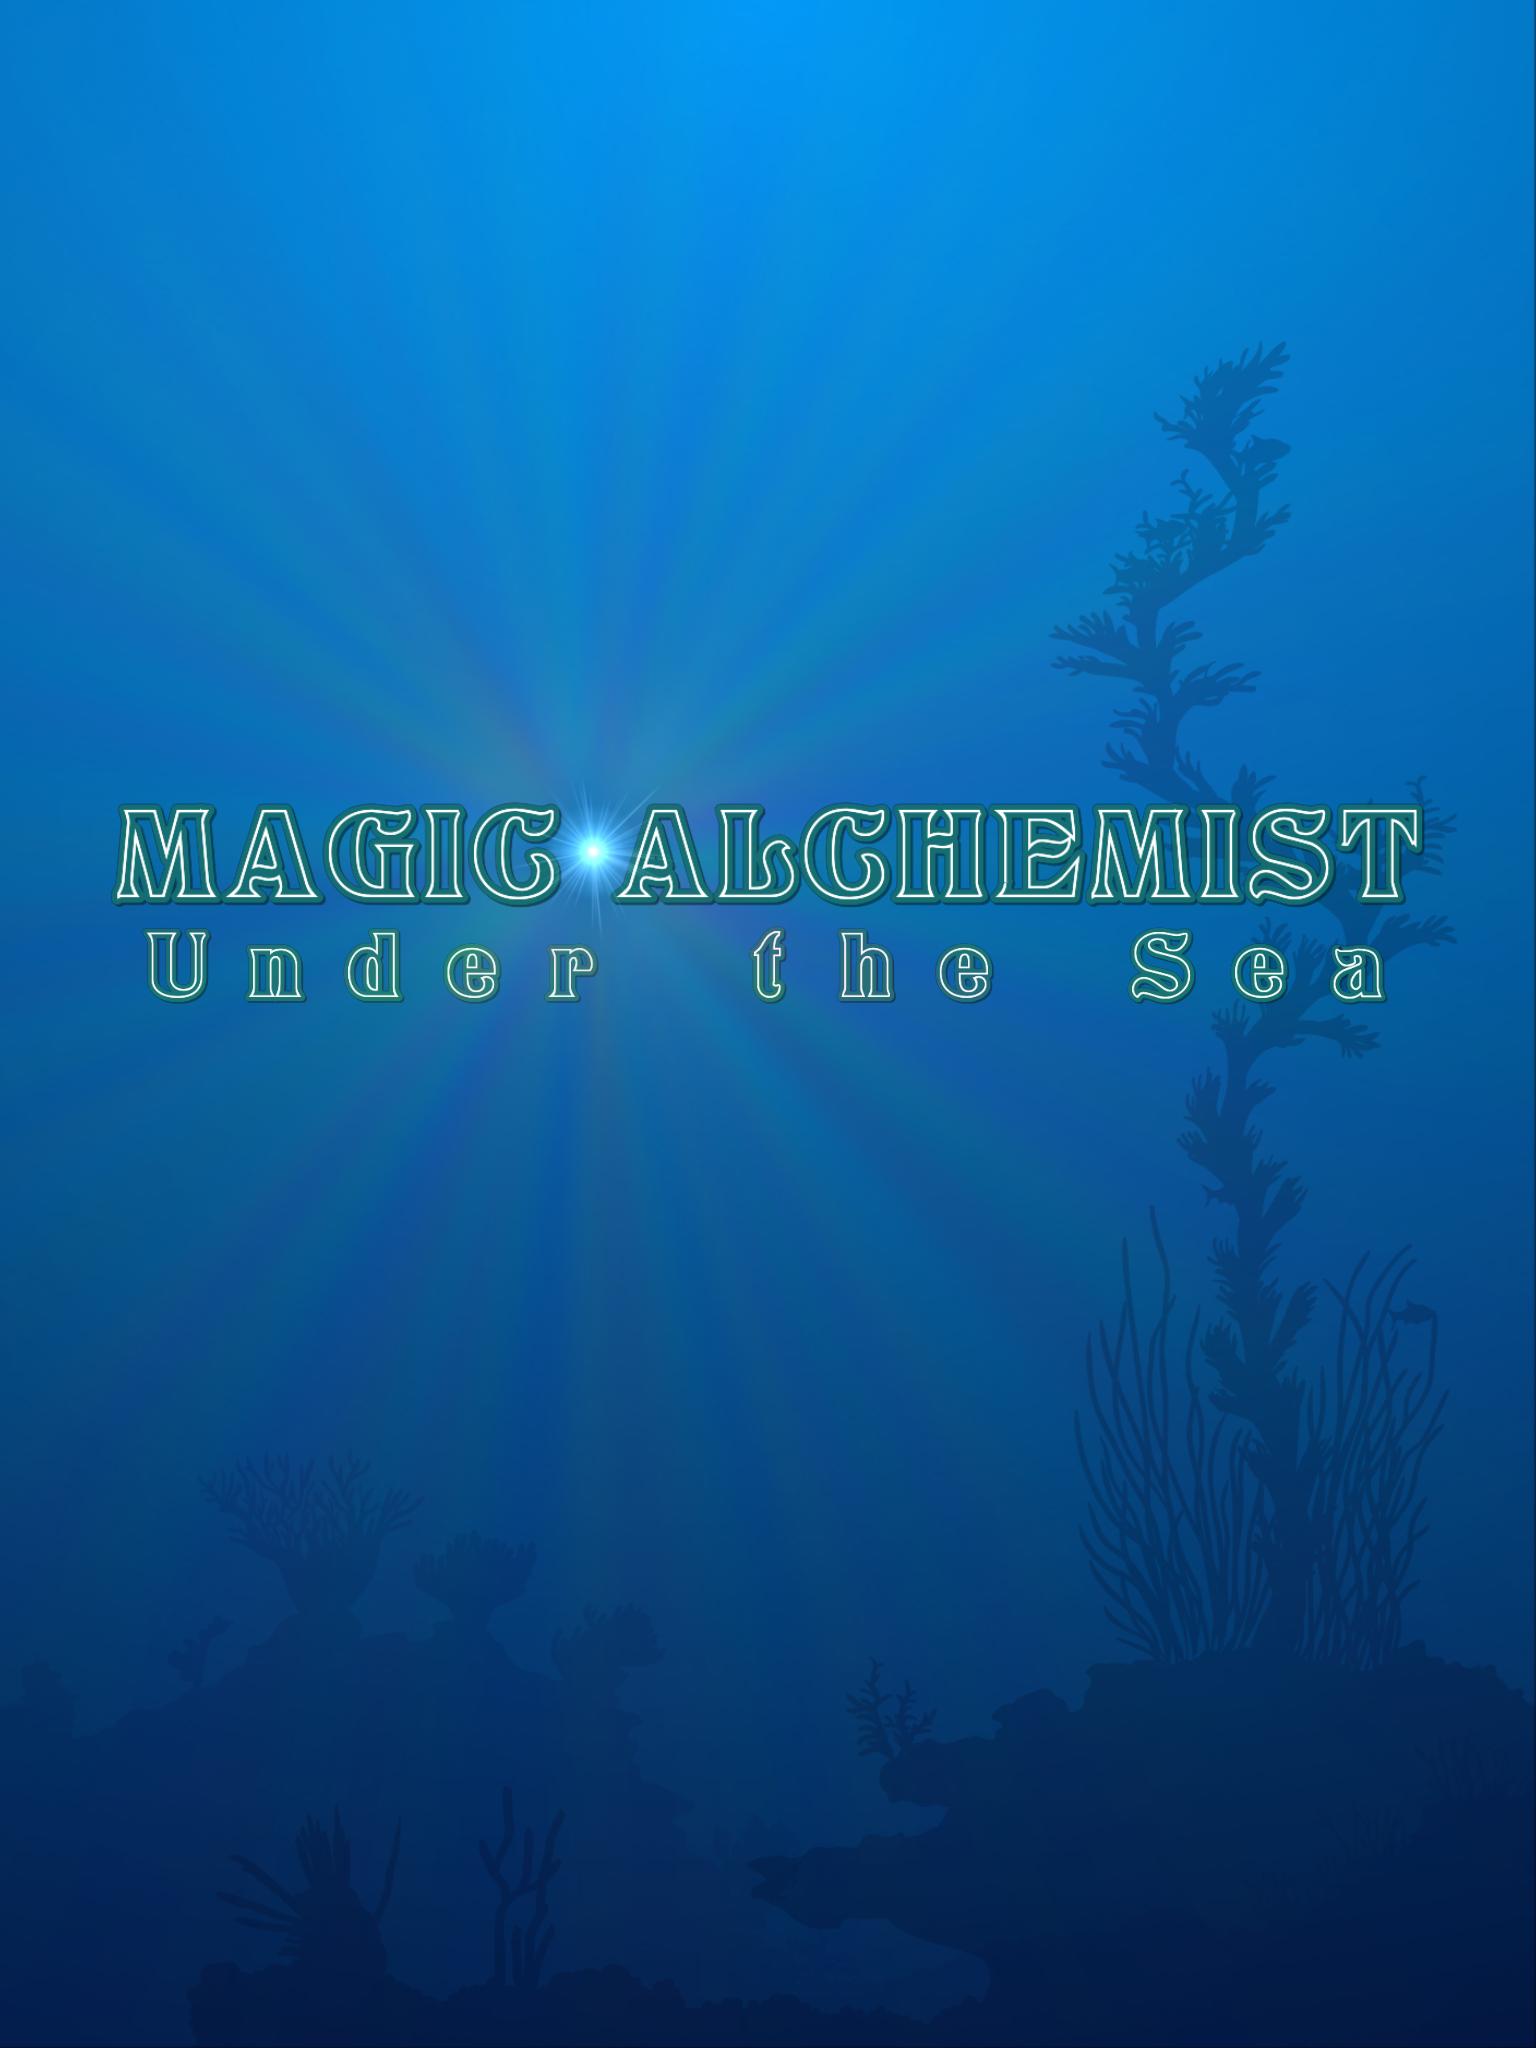 Magic Alchemist Under the Sea 2.01 Screenshot 15